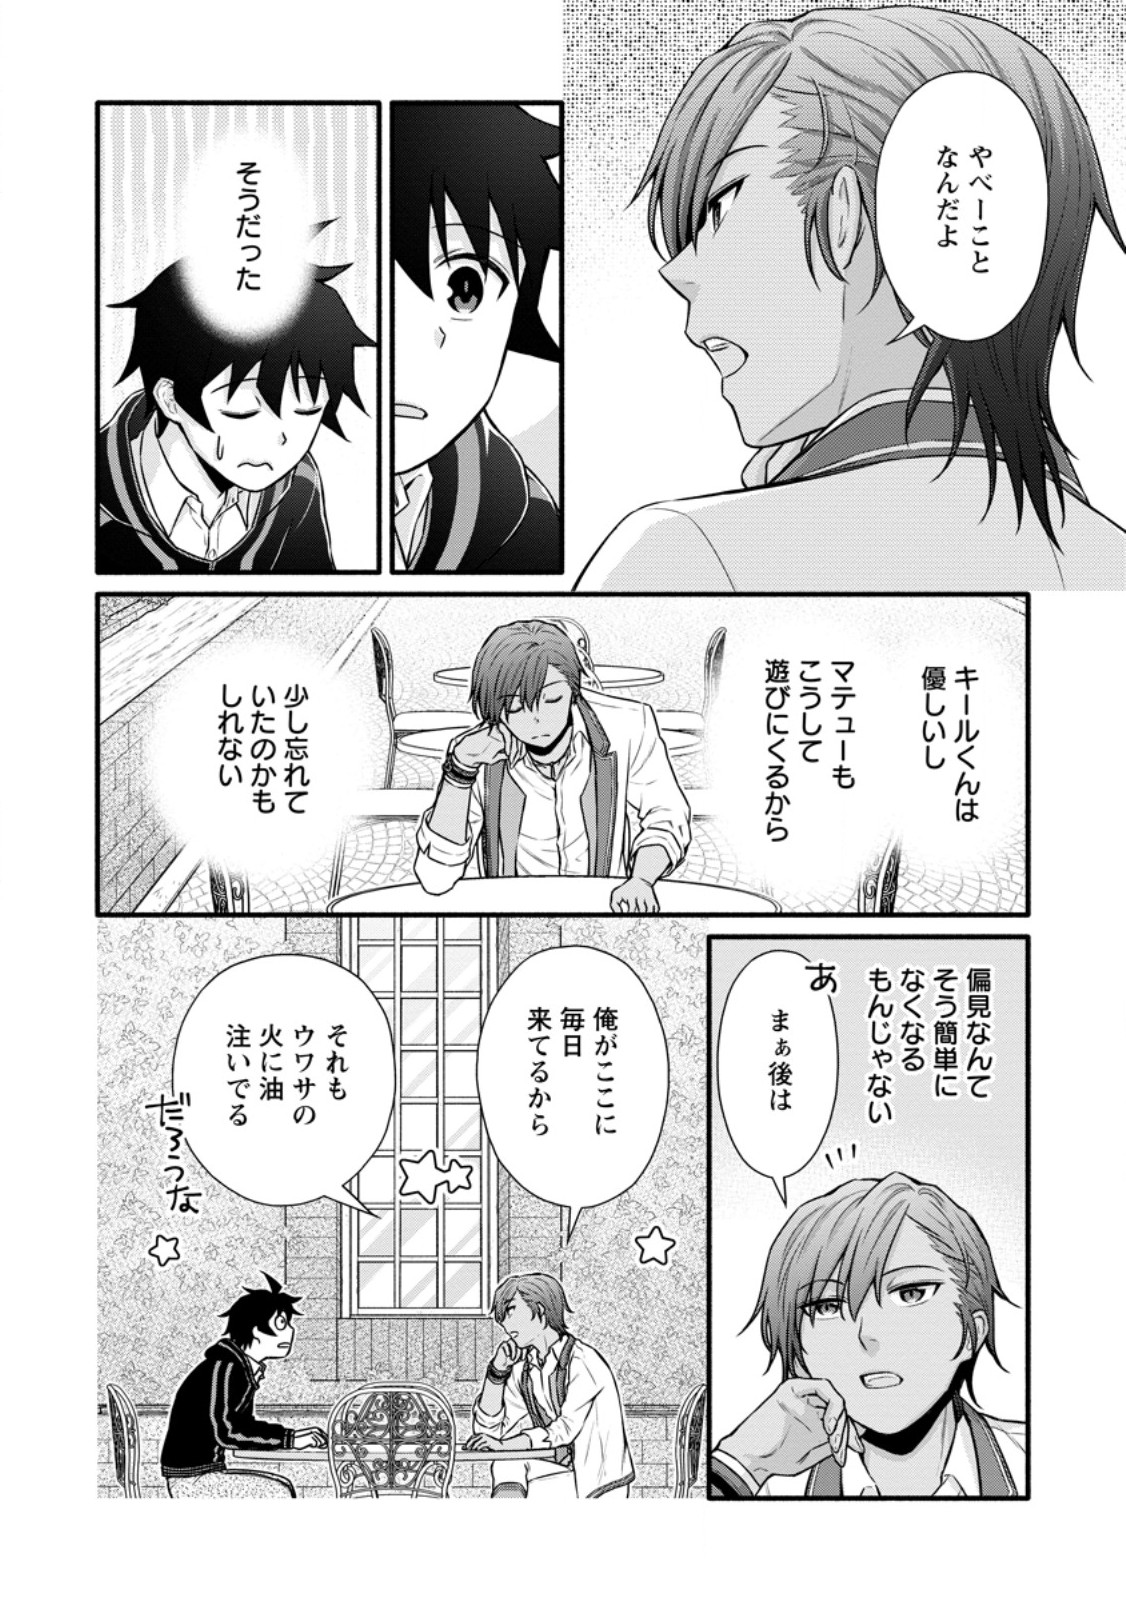 Gakuen Kishi no Level Up! - Chapter 39.3 - Page 2